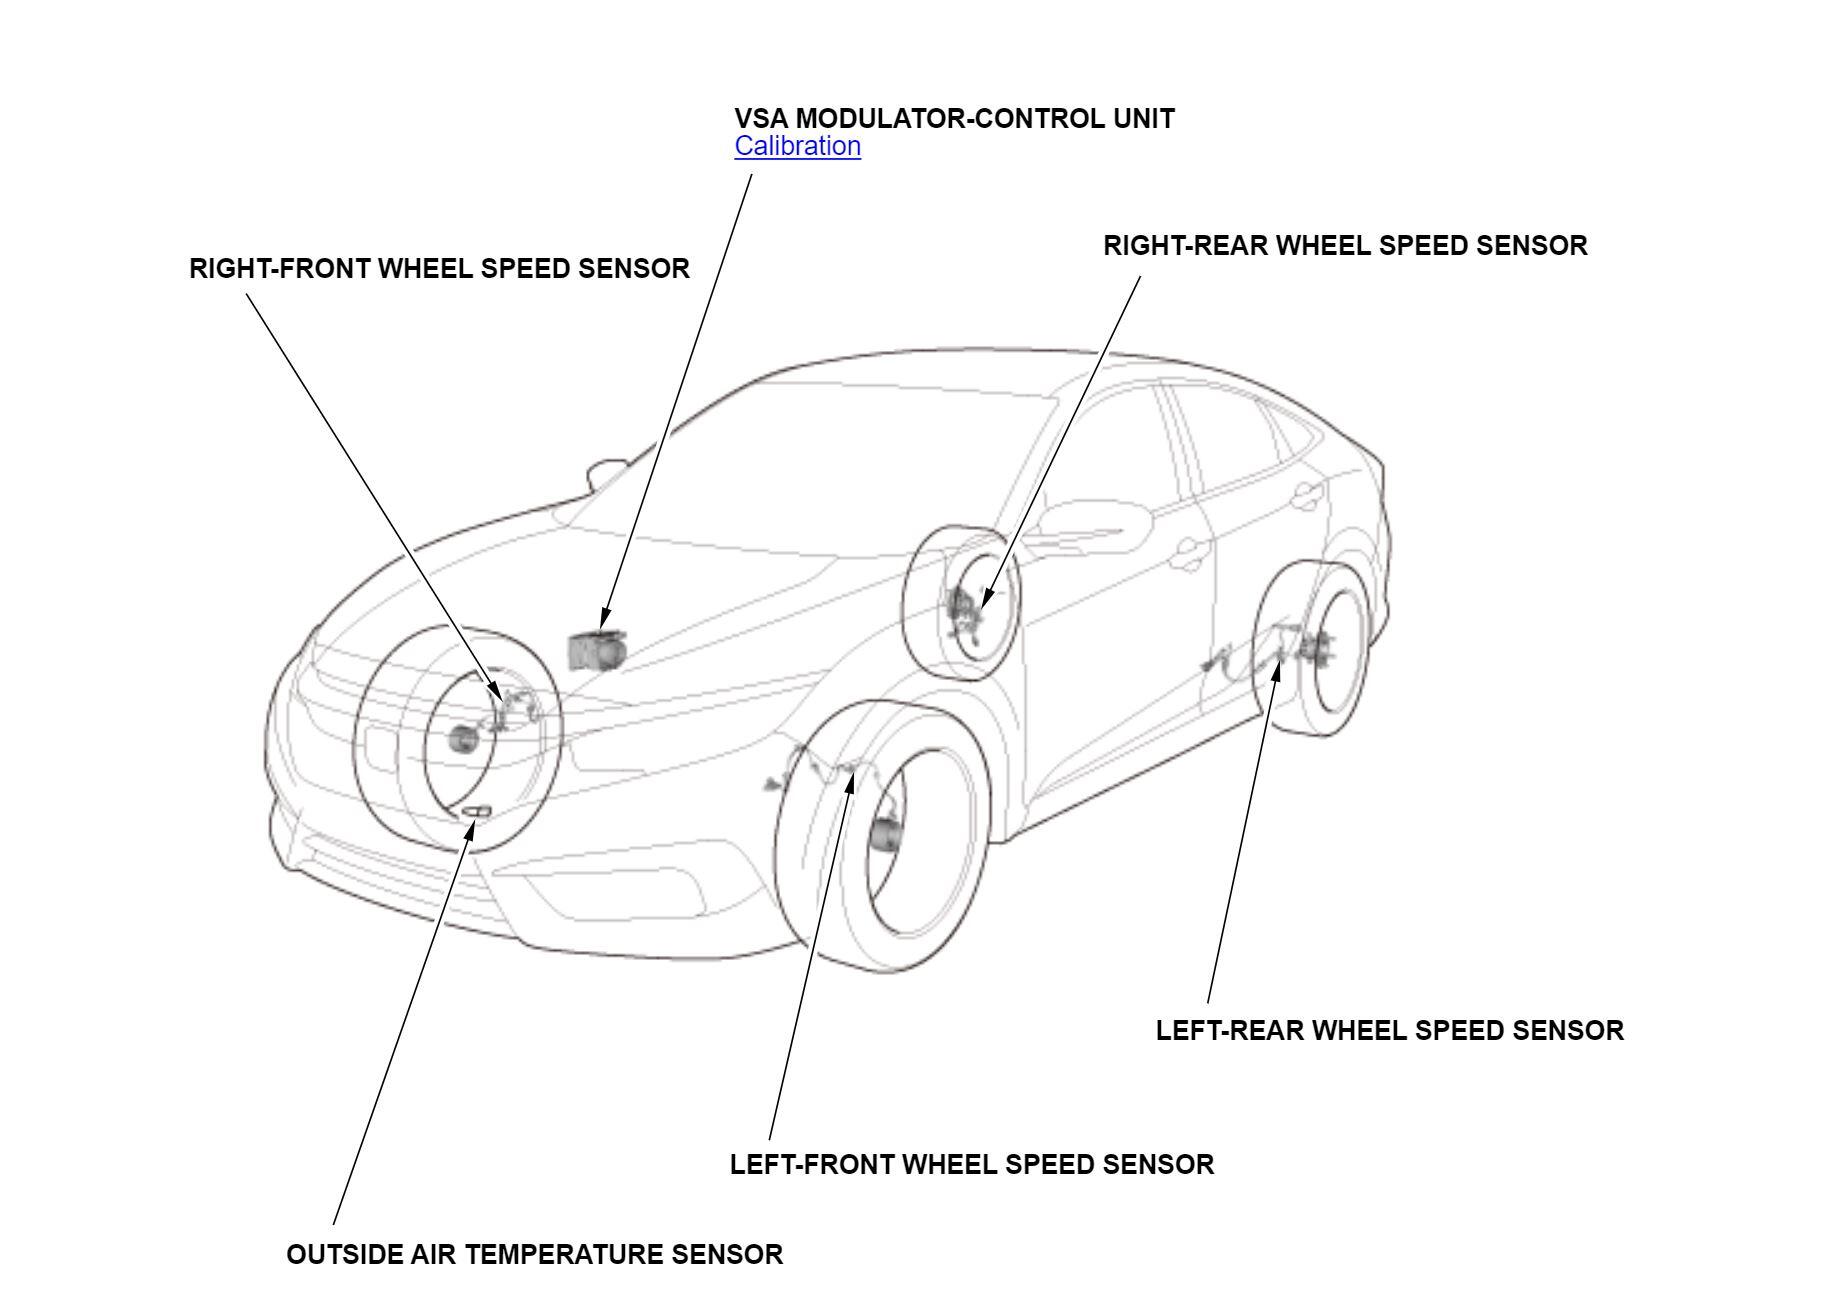 TPMS - Reset tire pressure light on the Honda Civic 2016-2020